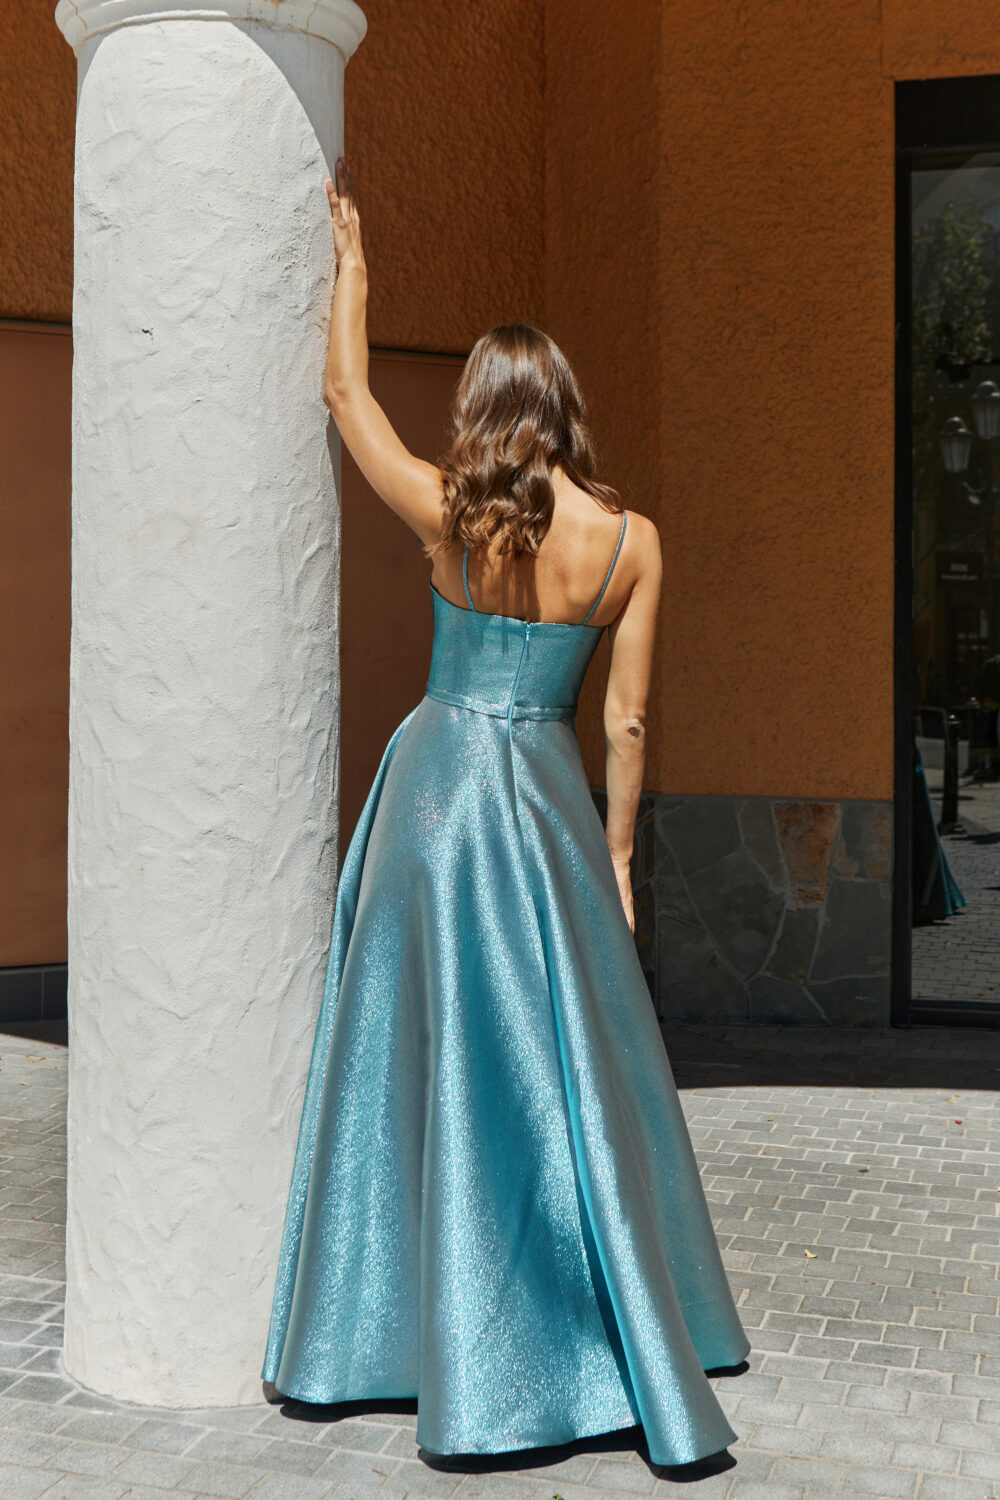 APOLLO PO953 Evening & Formal dress by Tania Olsen Designs